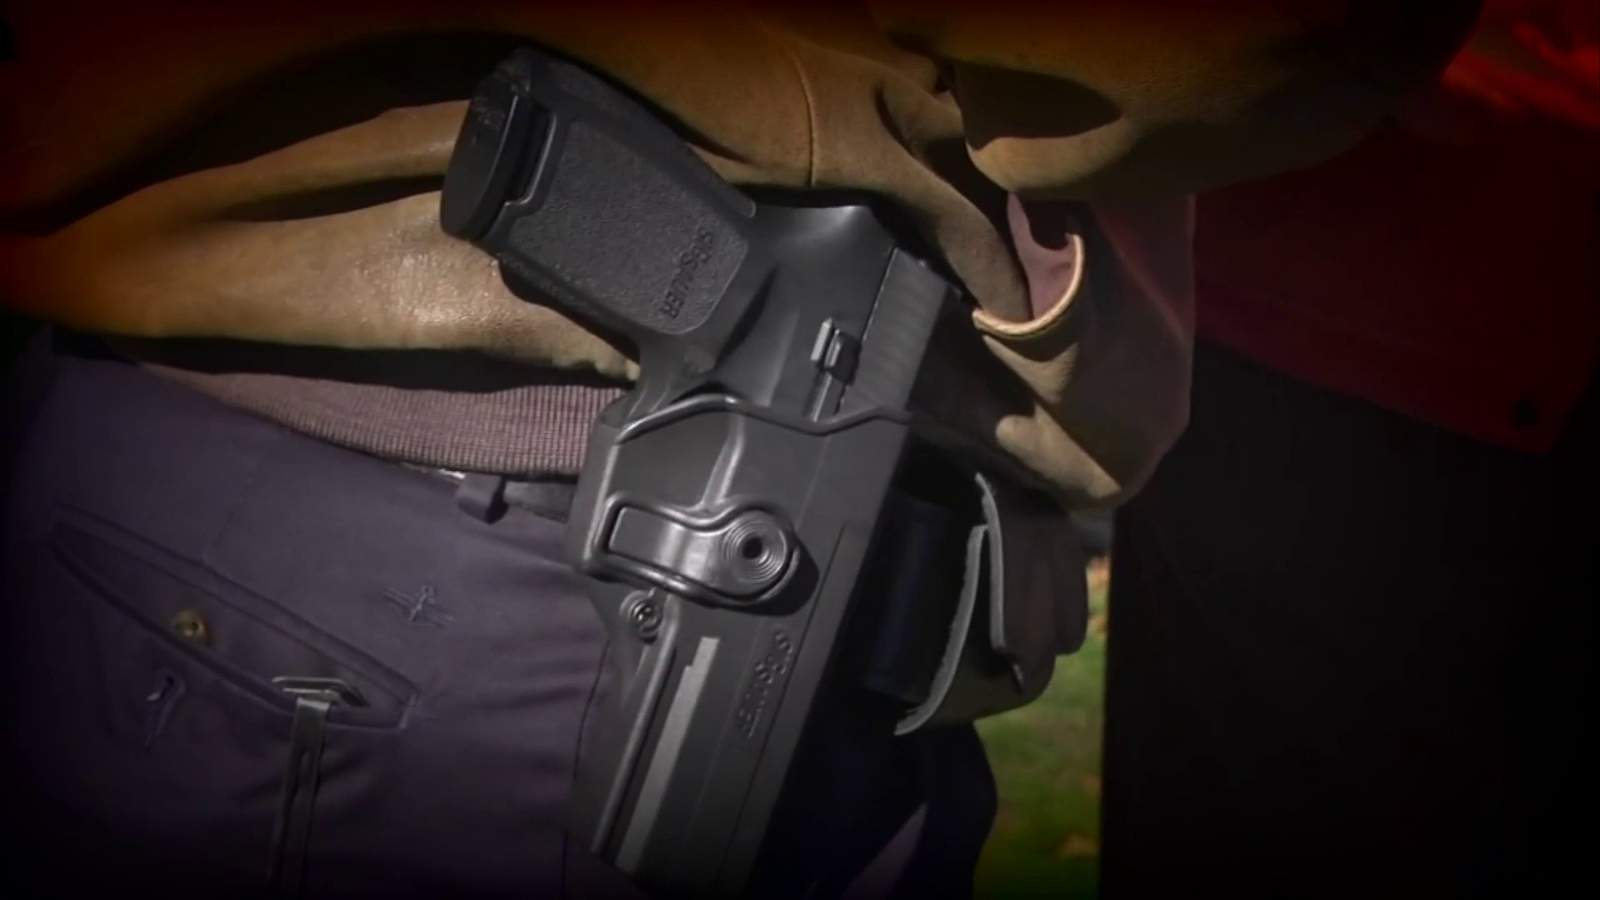 Four gun control bills move forward in Virginia Senate